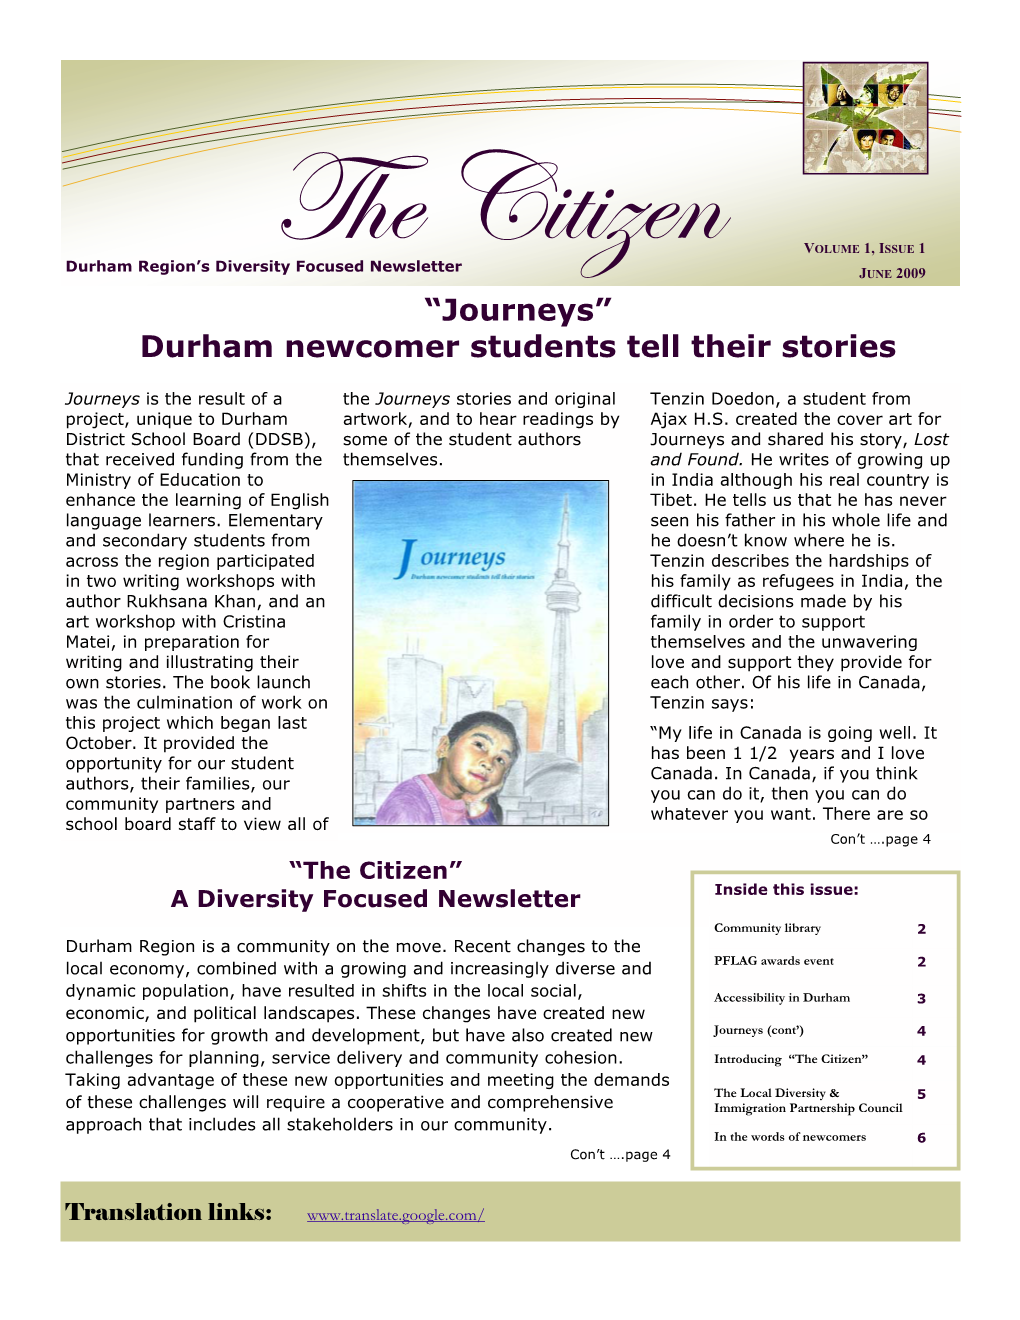 JUNE 2009 “Journeys” Durham Newcomer Students Tell Their Stories